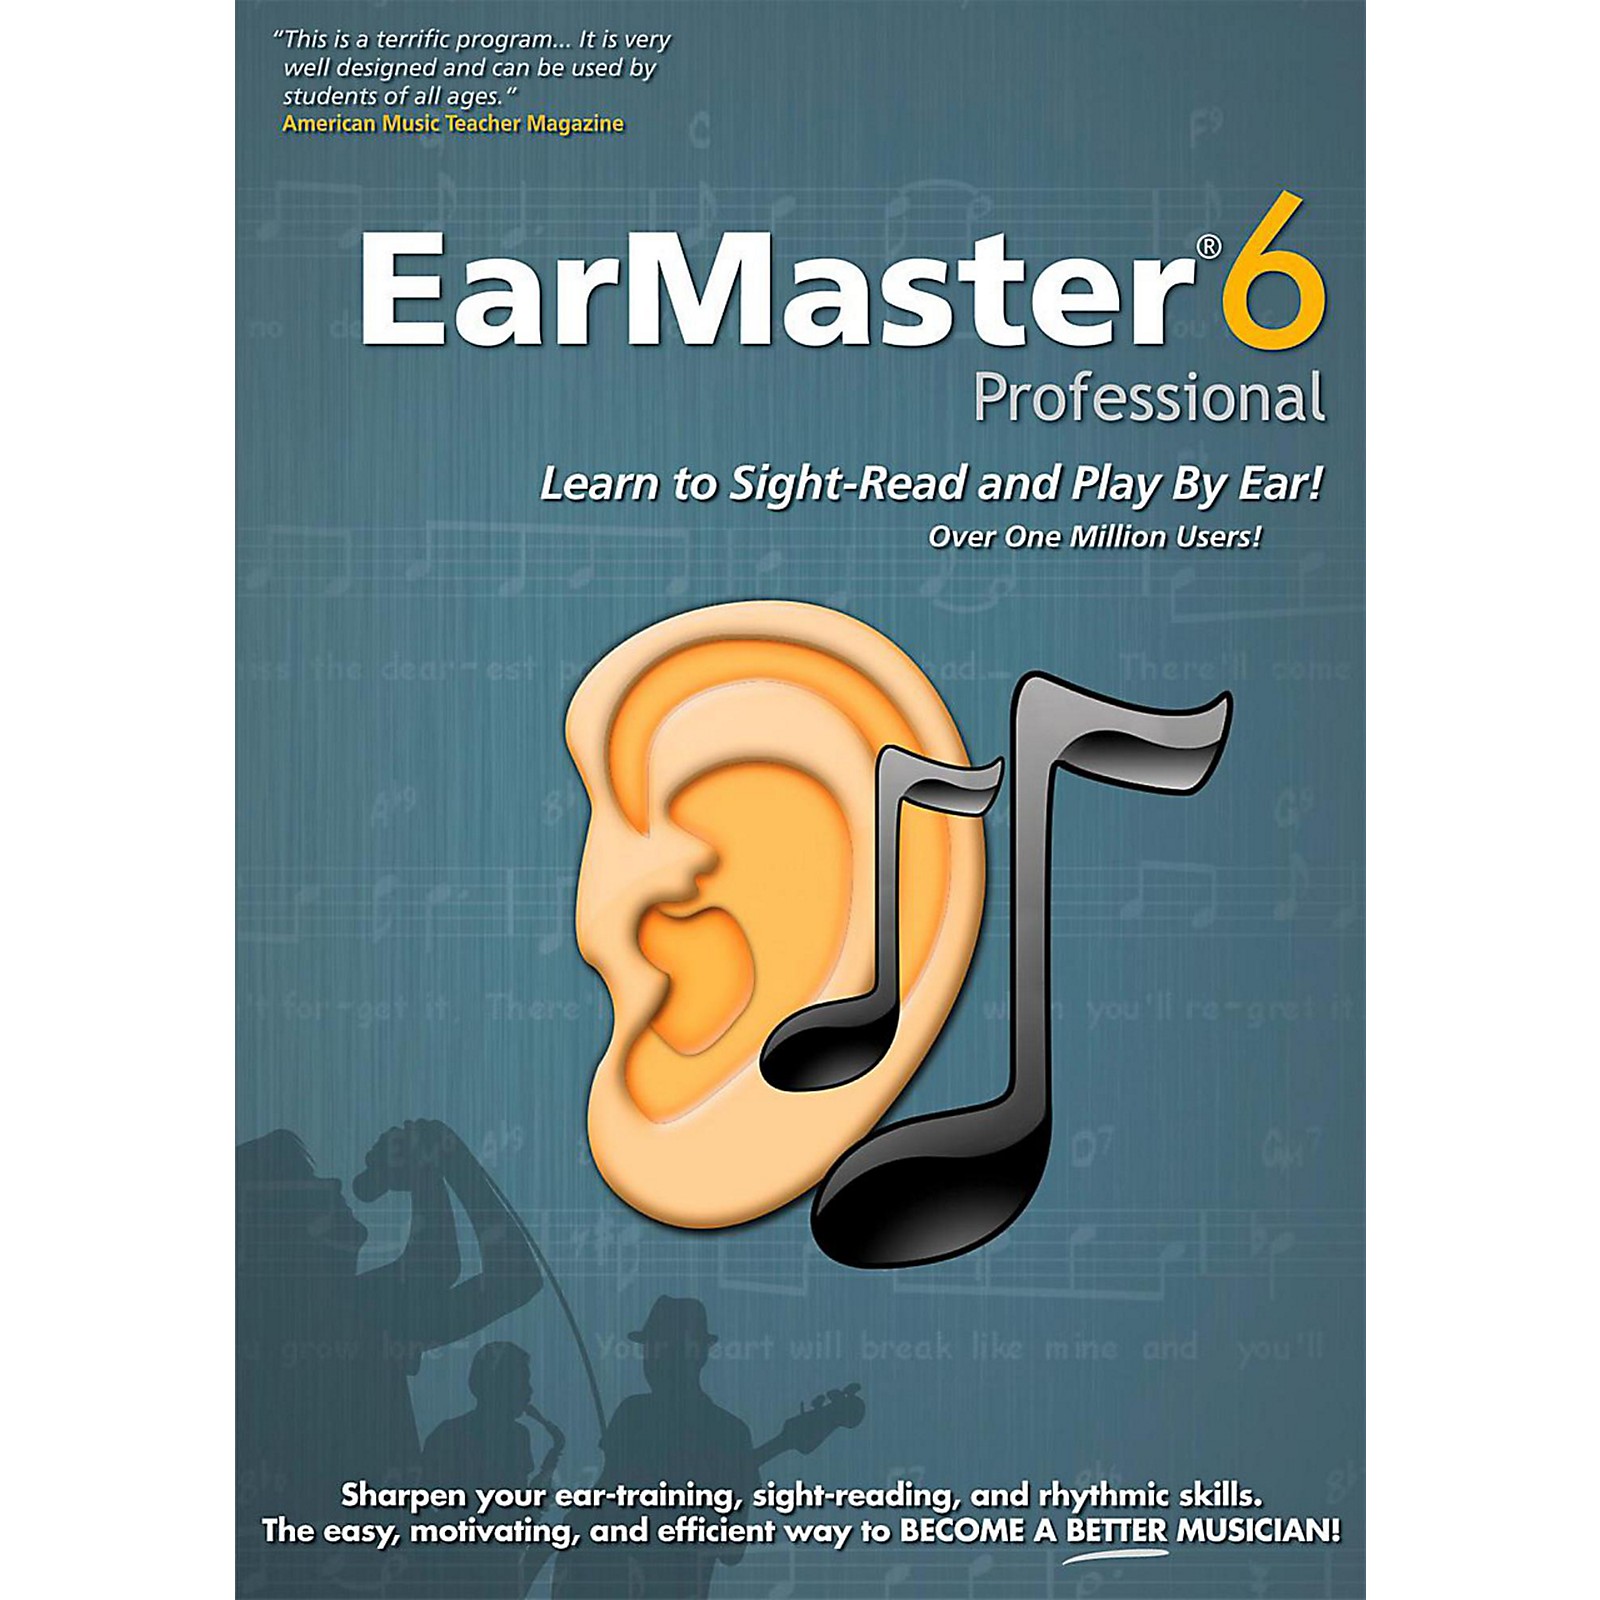 earmaster pro 6.2 acess violation